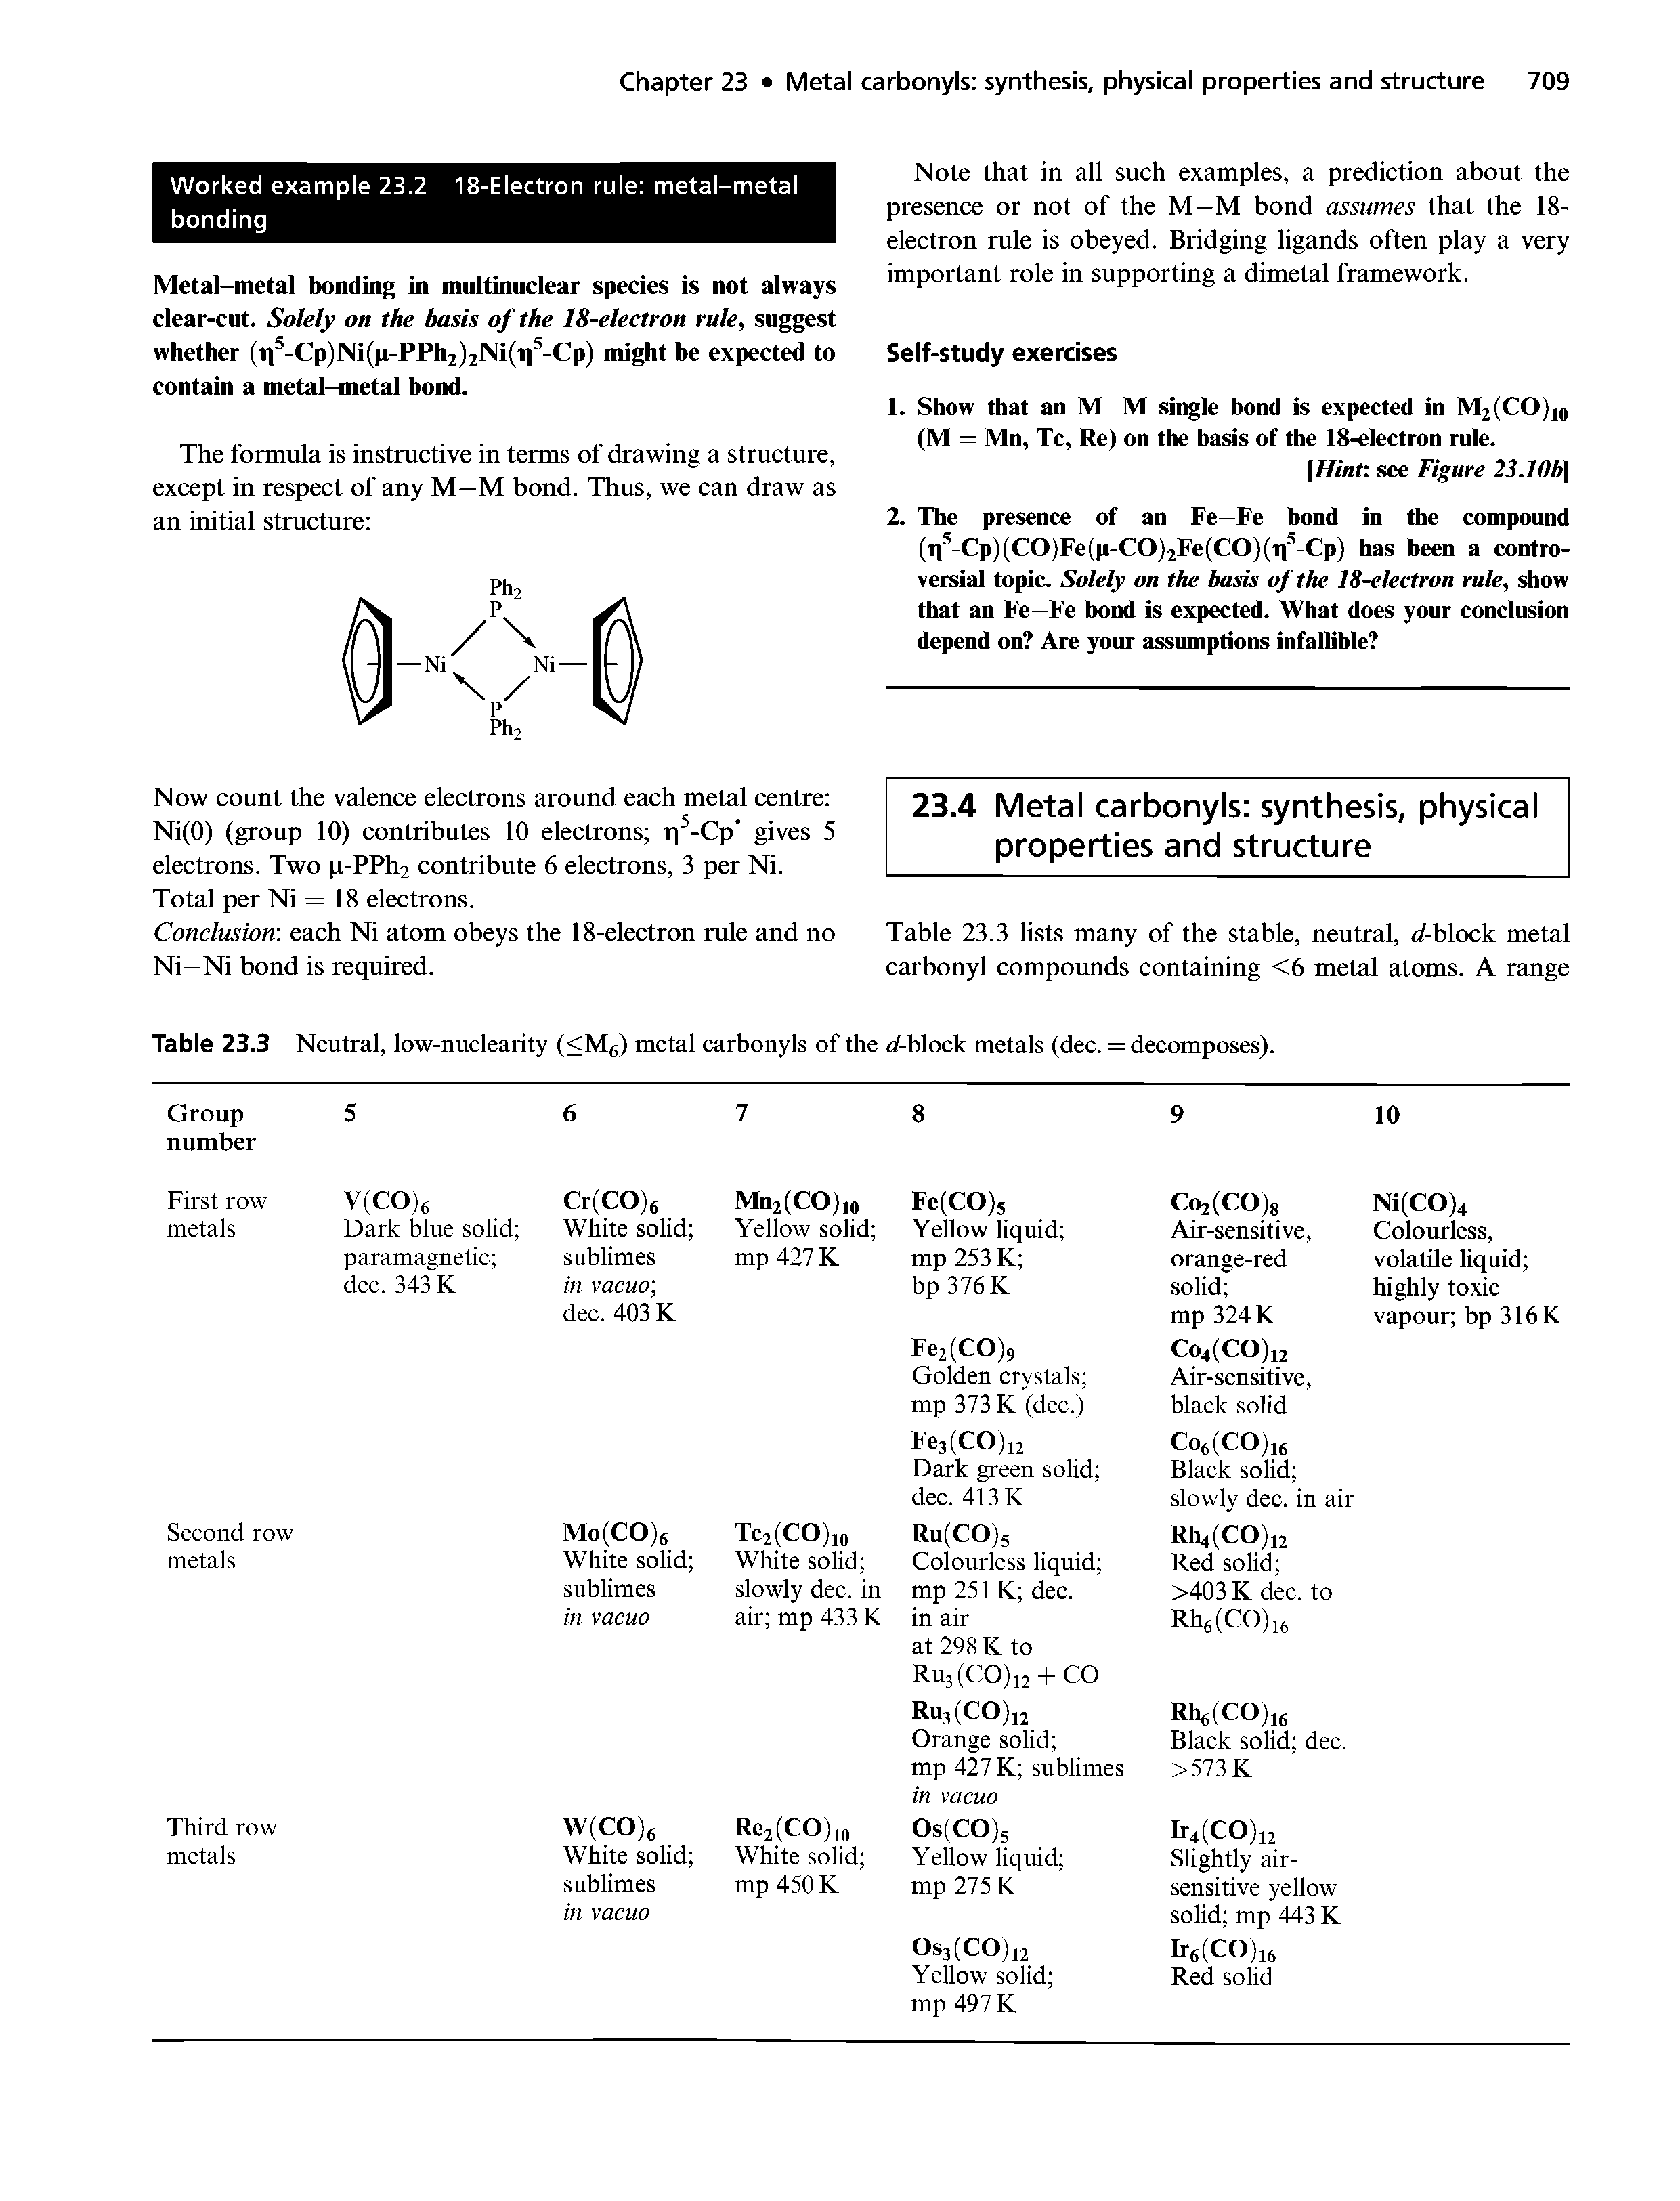 Table 23.3 Neutral, low-nuclearity (<Mg) metal carbonyls of the d-block metals (dec. = decomposes).